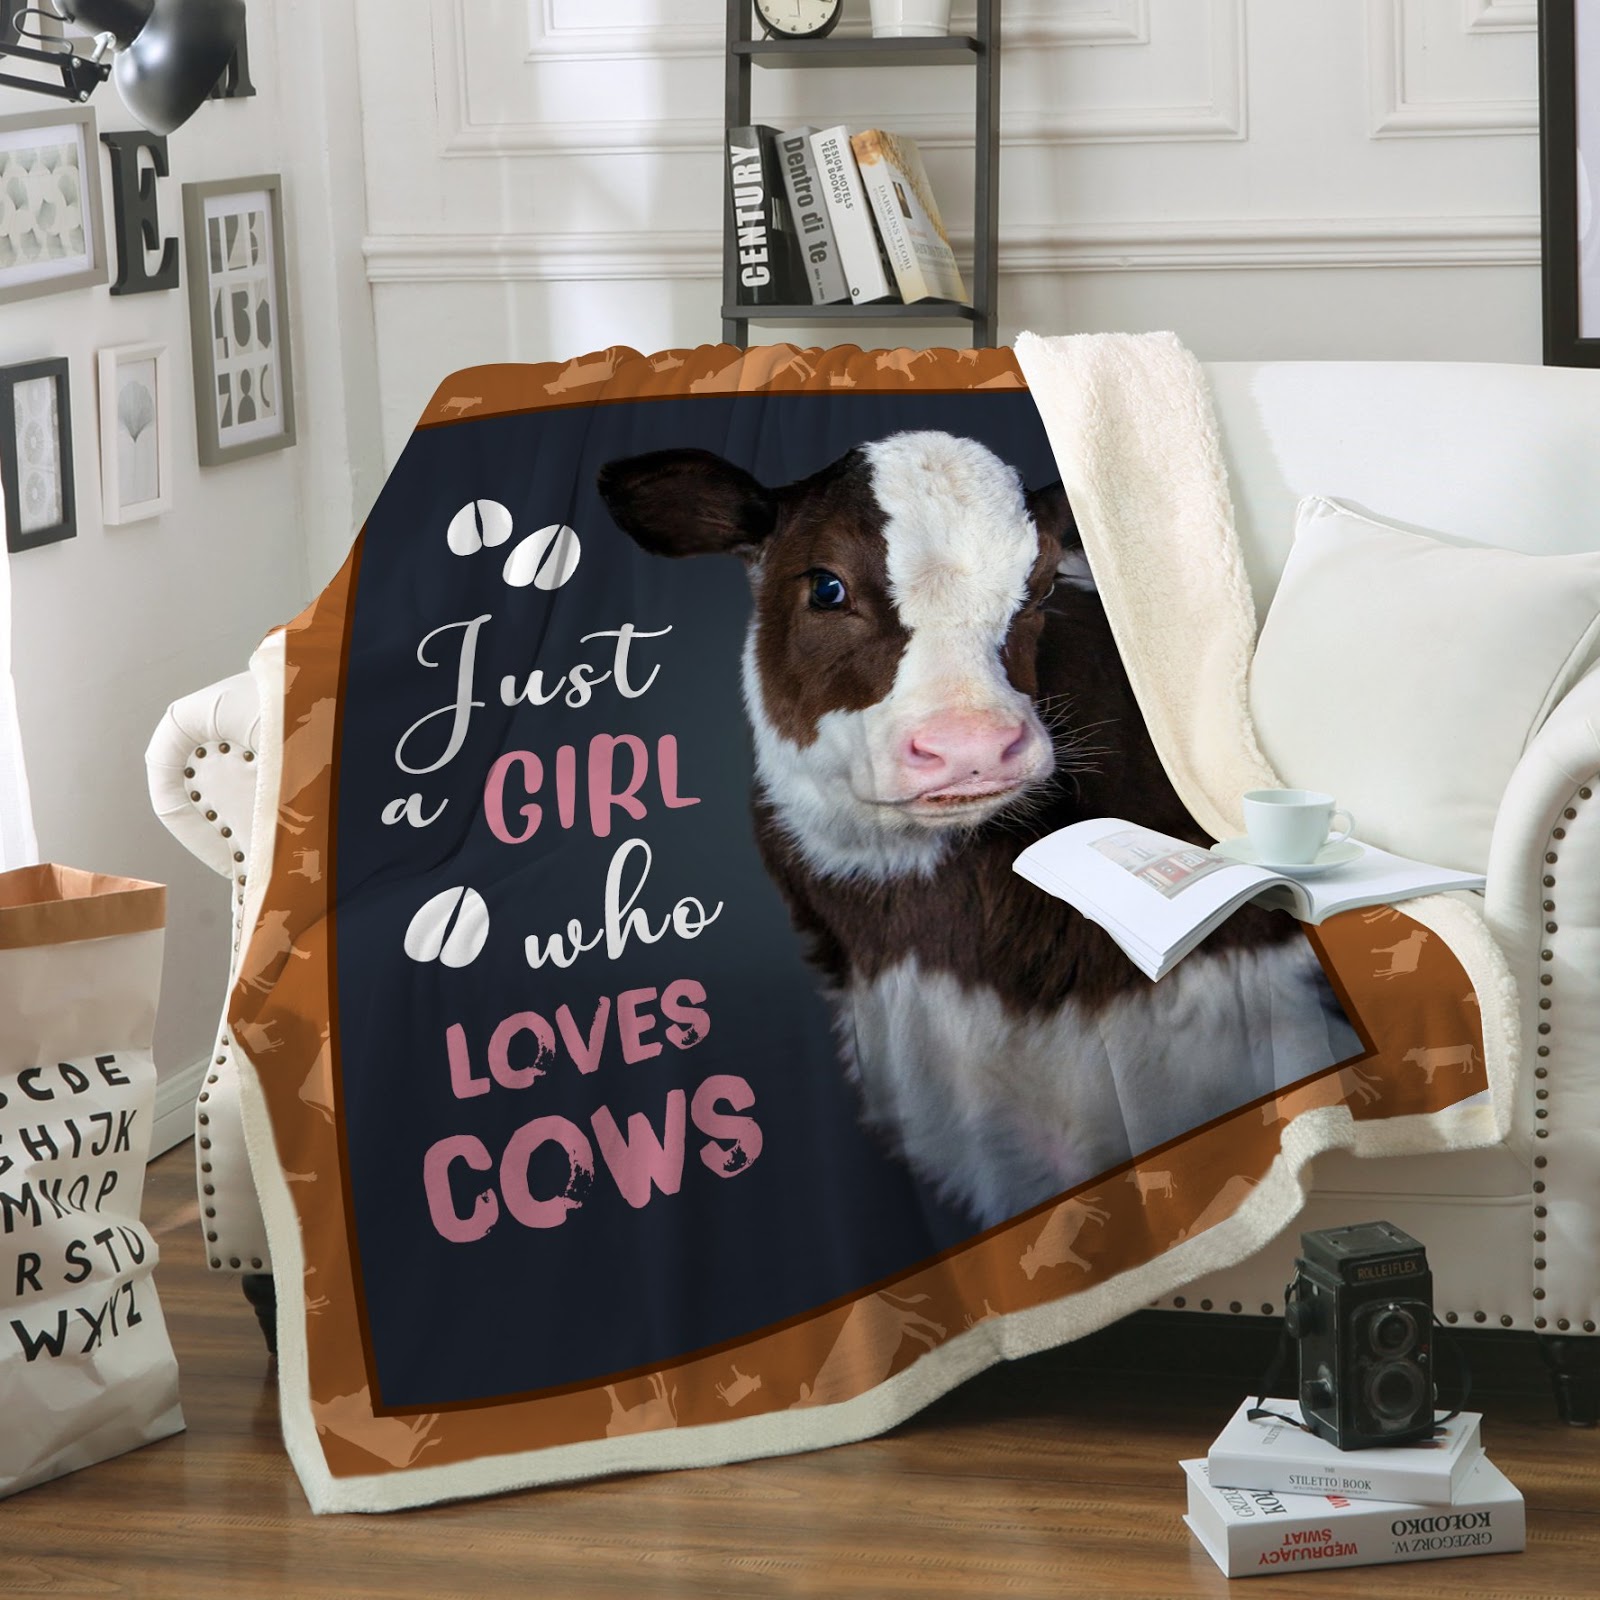 Just girl who loves cows full printing blanket 2